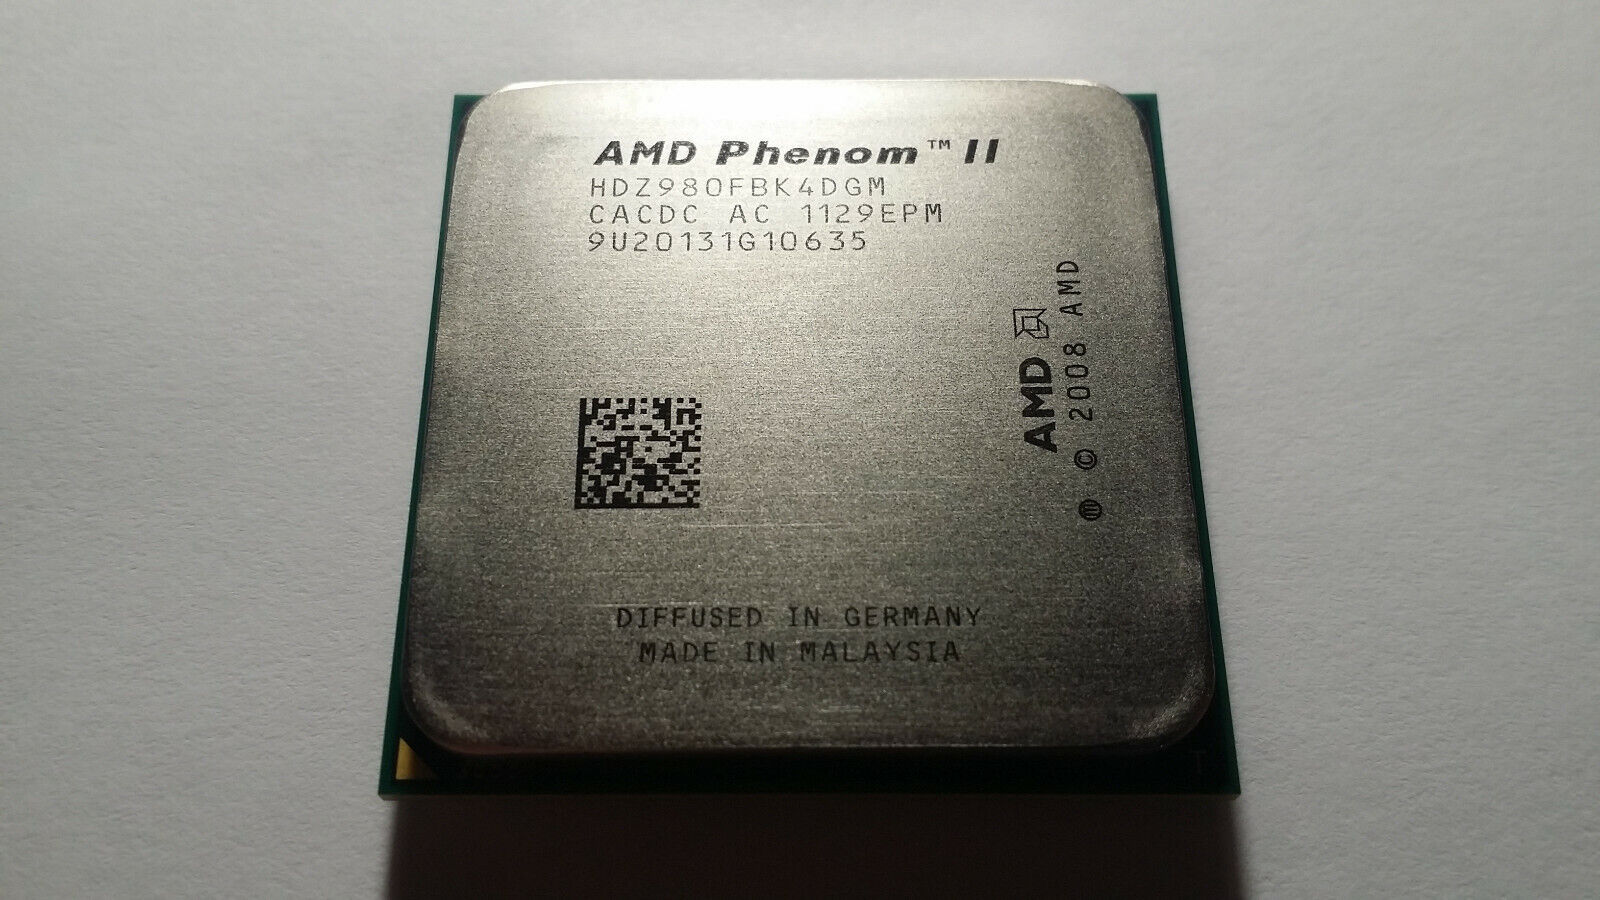 Phenom x4 980. Процессор AMD Phenom II hdz965fbk4d6m. Инфа об AMD Phenom II x2 550.